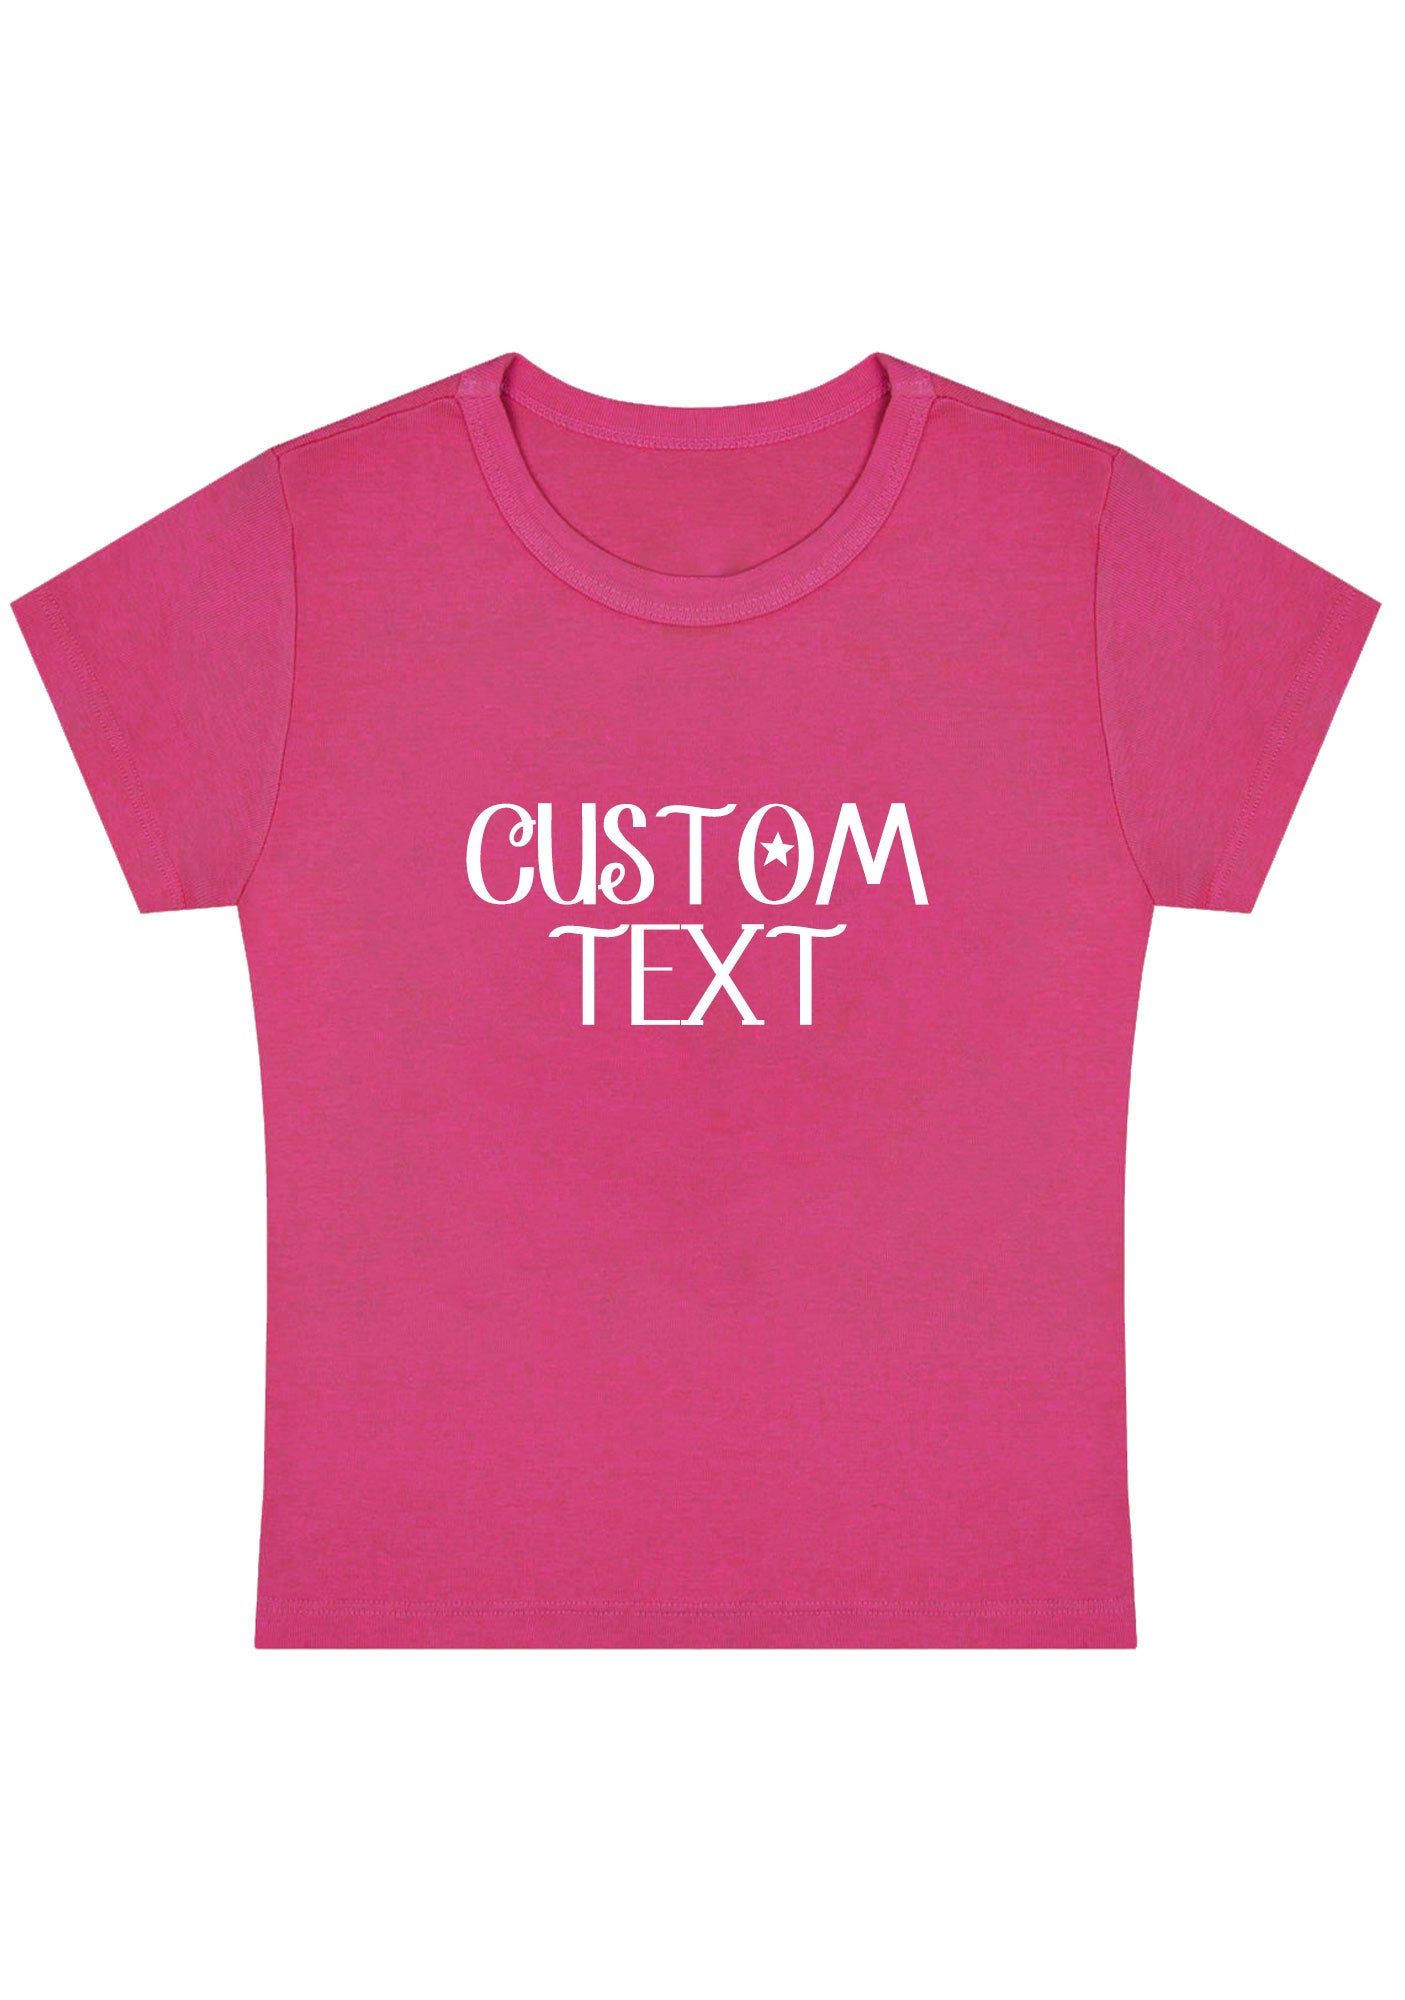 Curvy Custom Personalized Text Baby Tee